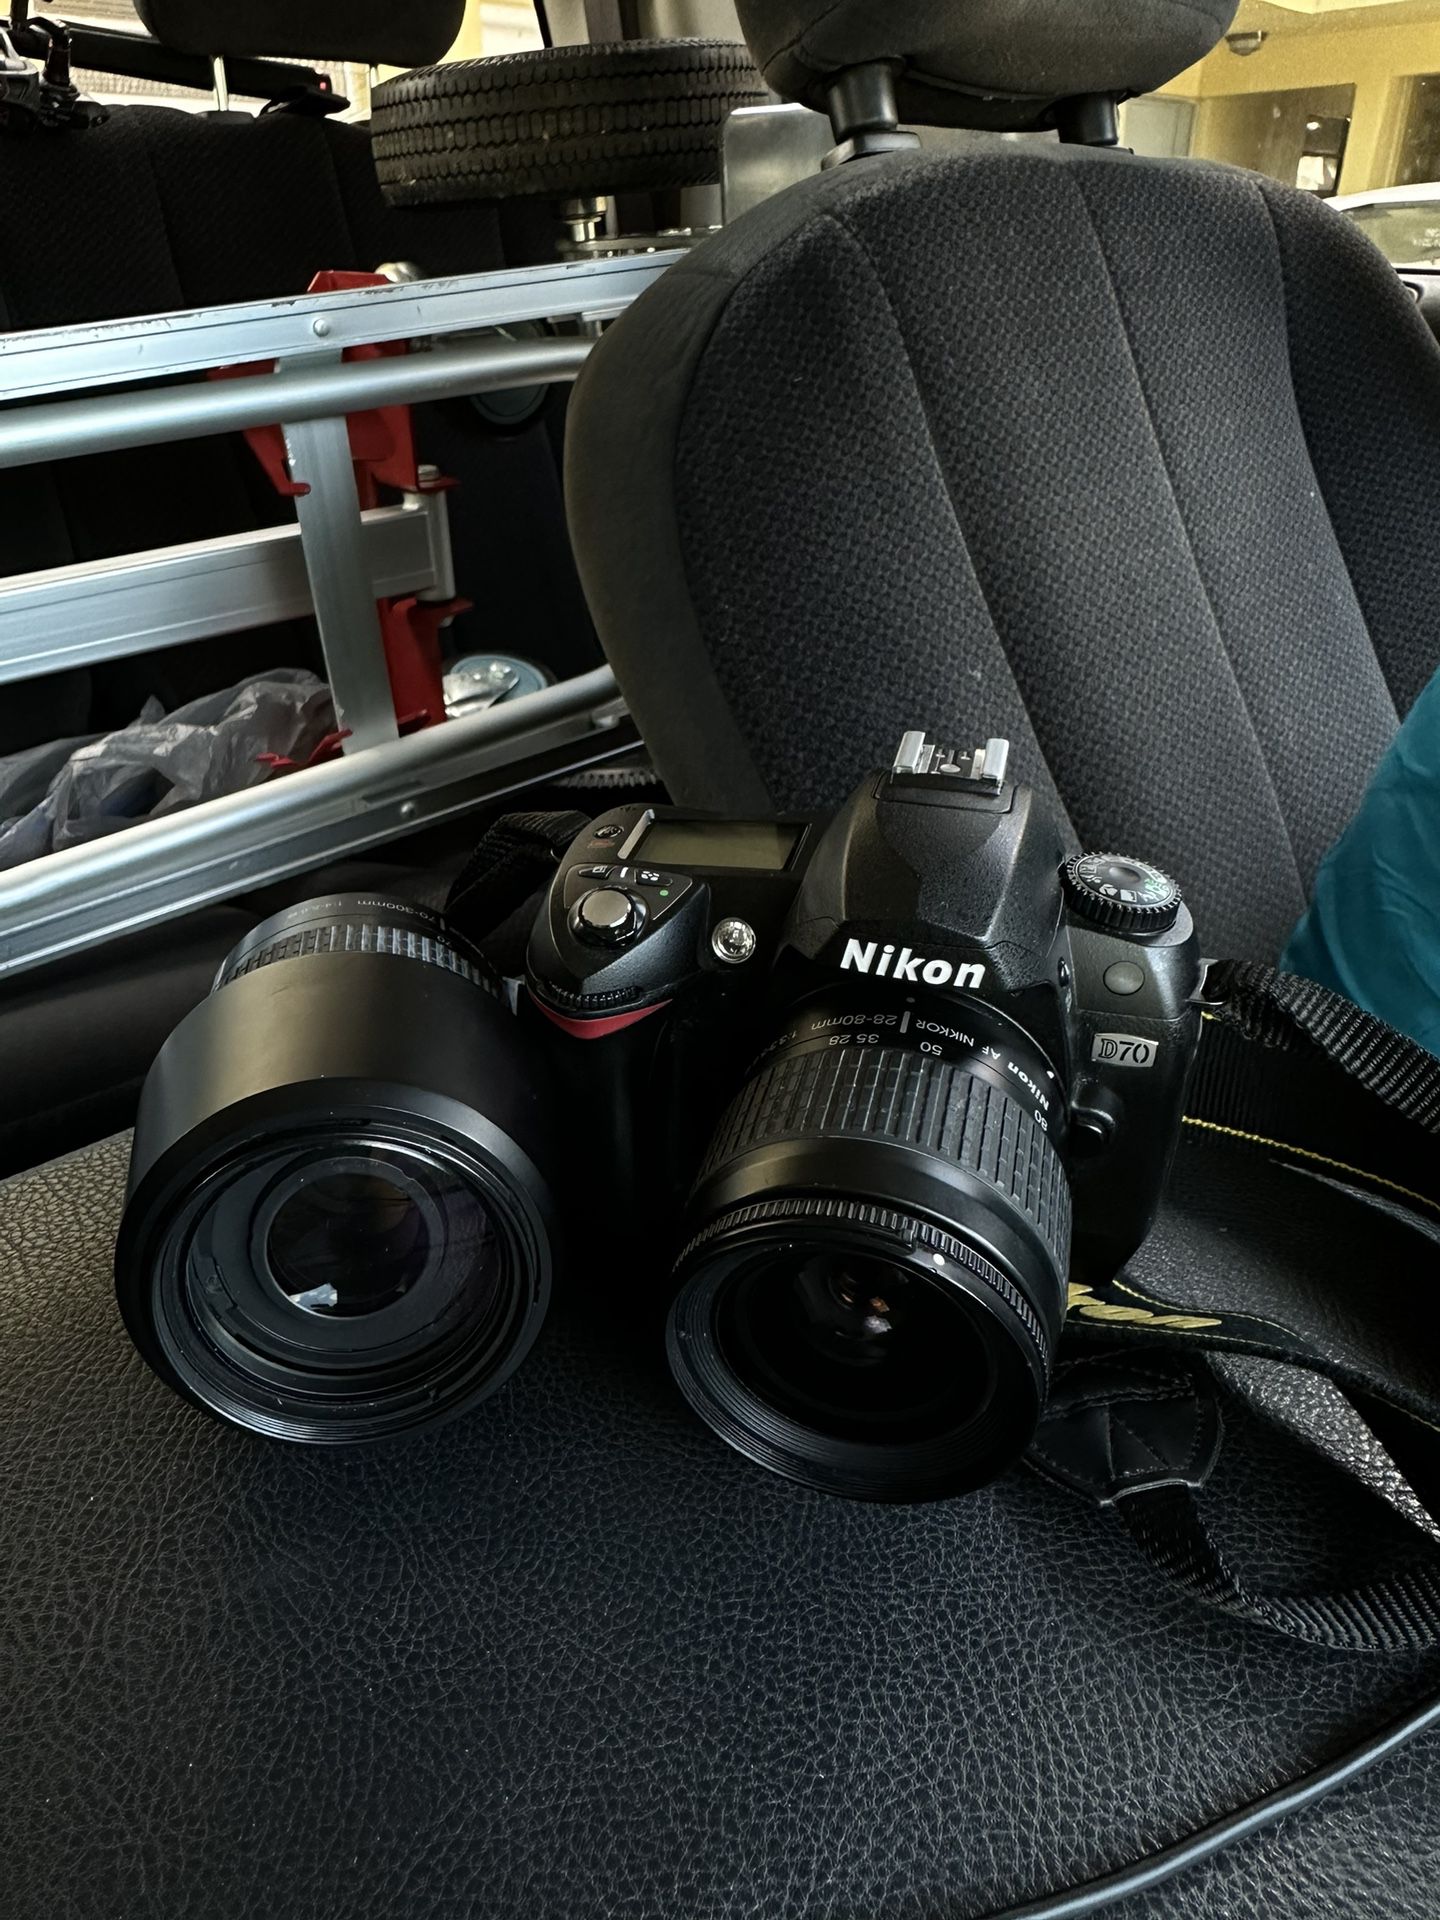 Nikon D70 Digital SLR camera set